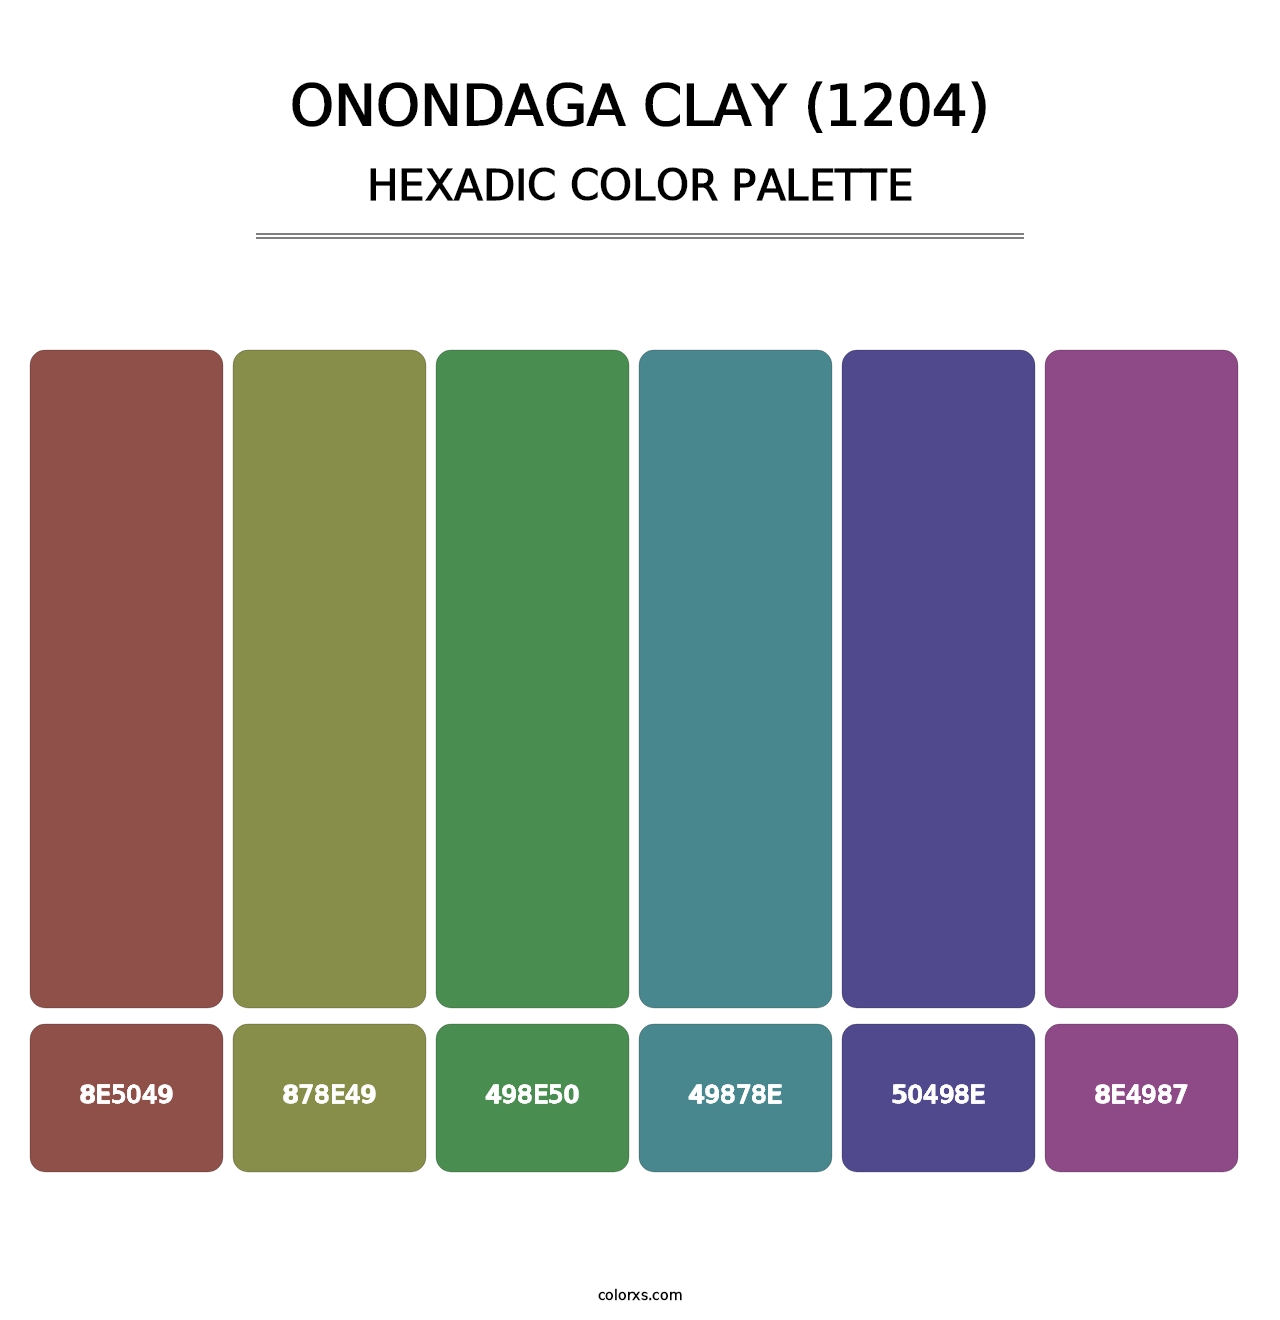 Onondaga Clay (1204) - Hexadic Color Palette